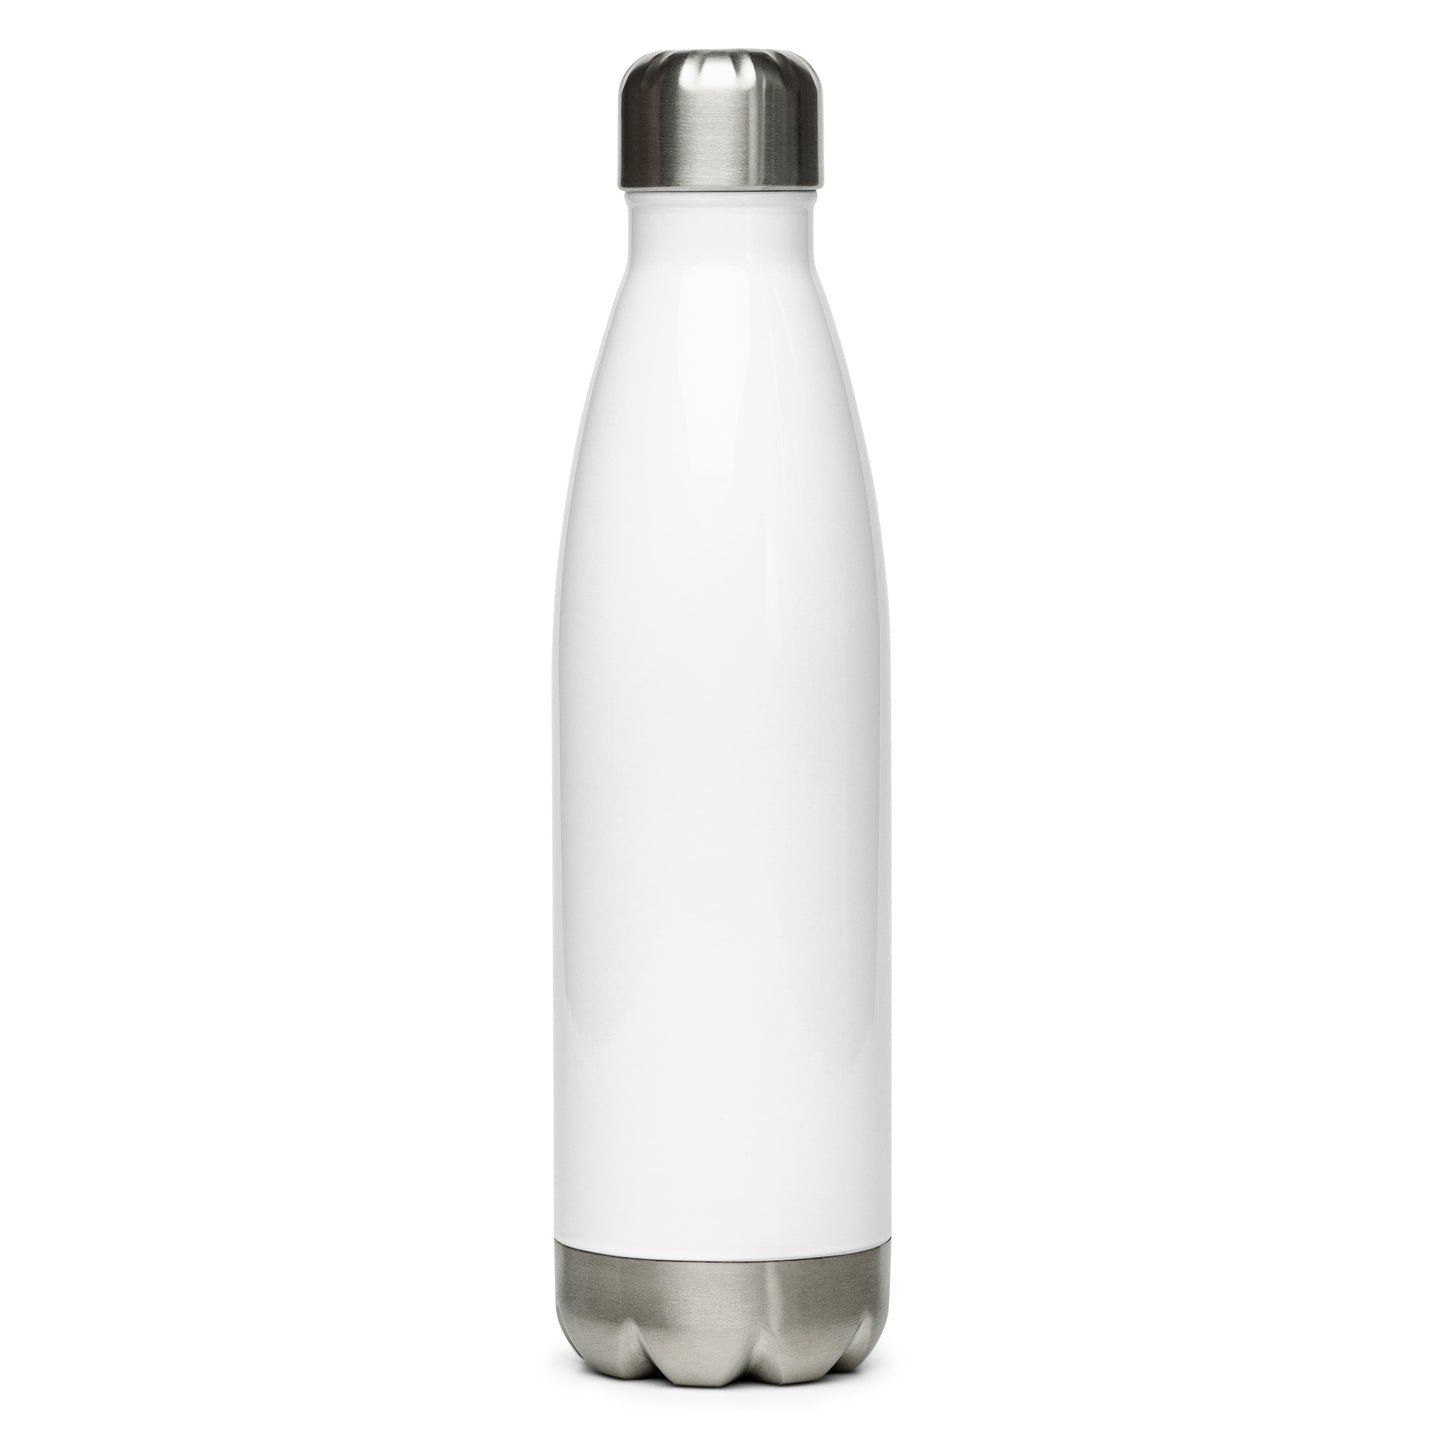 Santa Barbara Surf "Faith" - Stainless steel water bottle